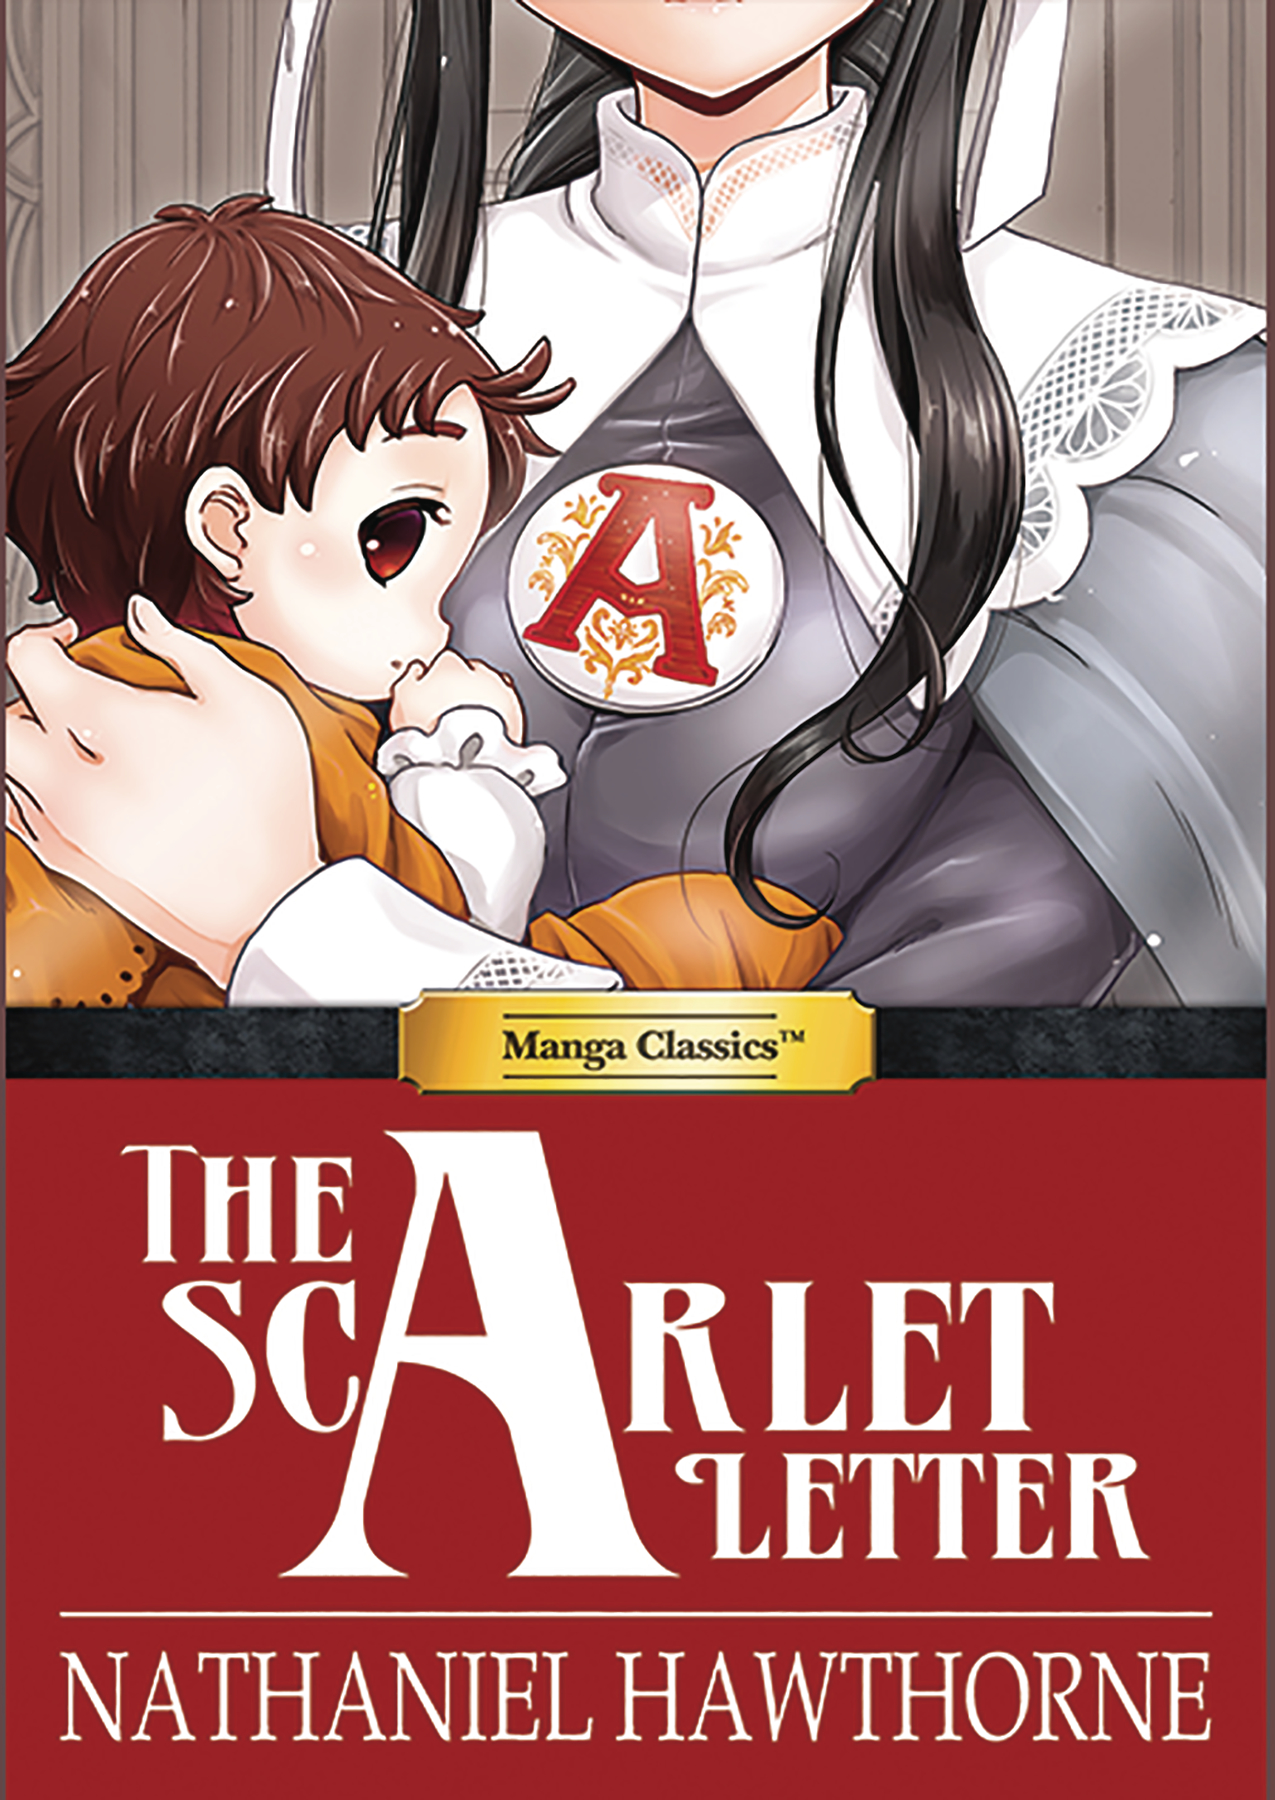 Manga Classics Scarlet Letter Hardcover